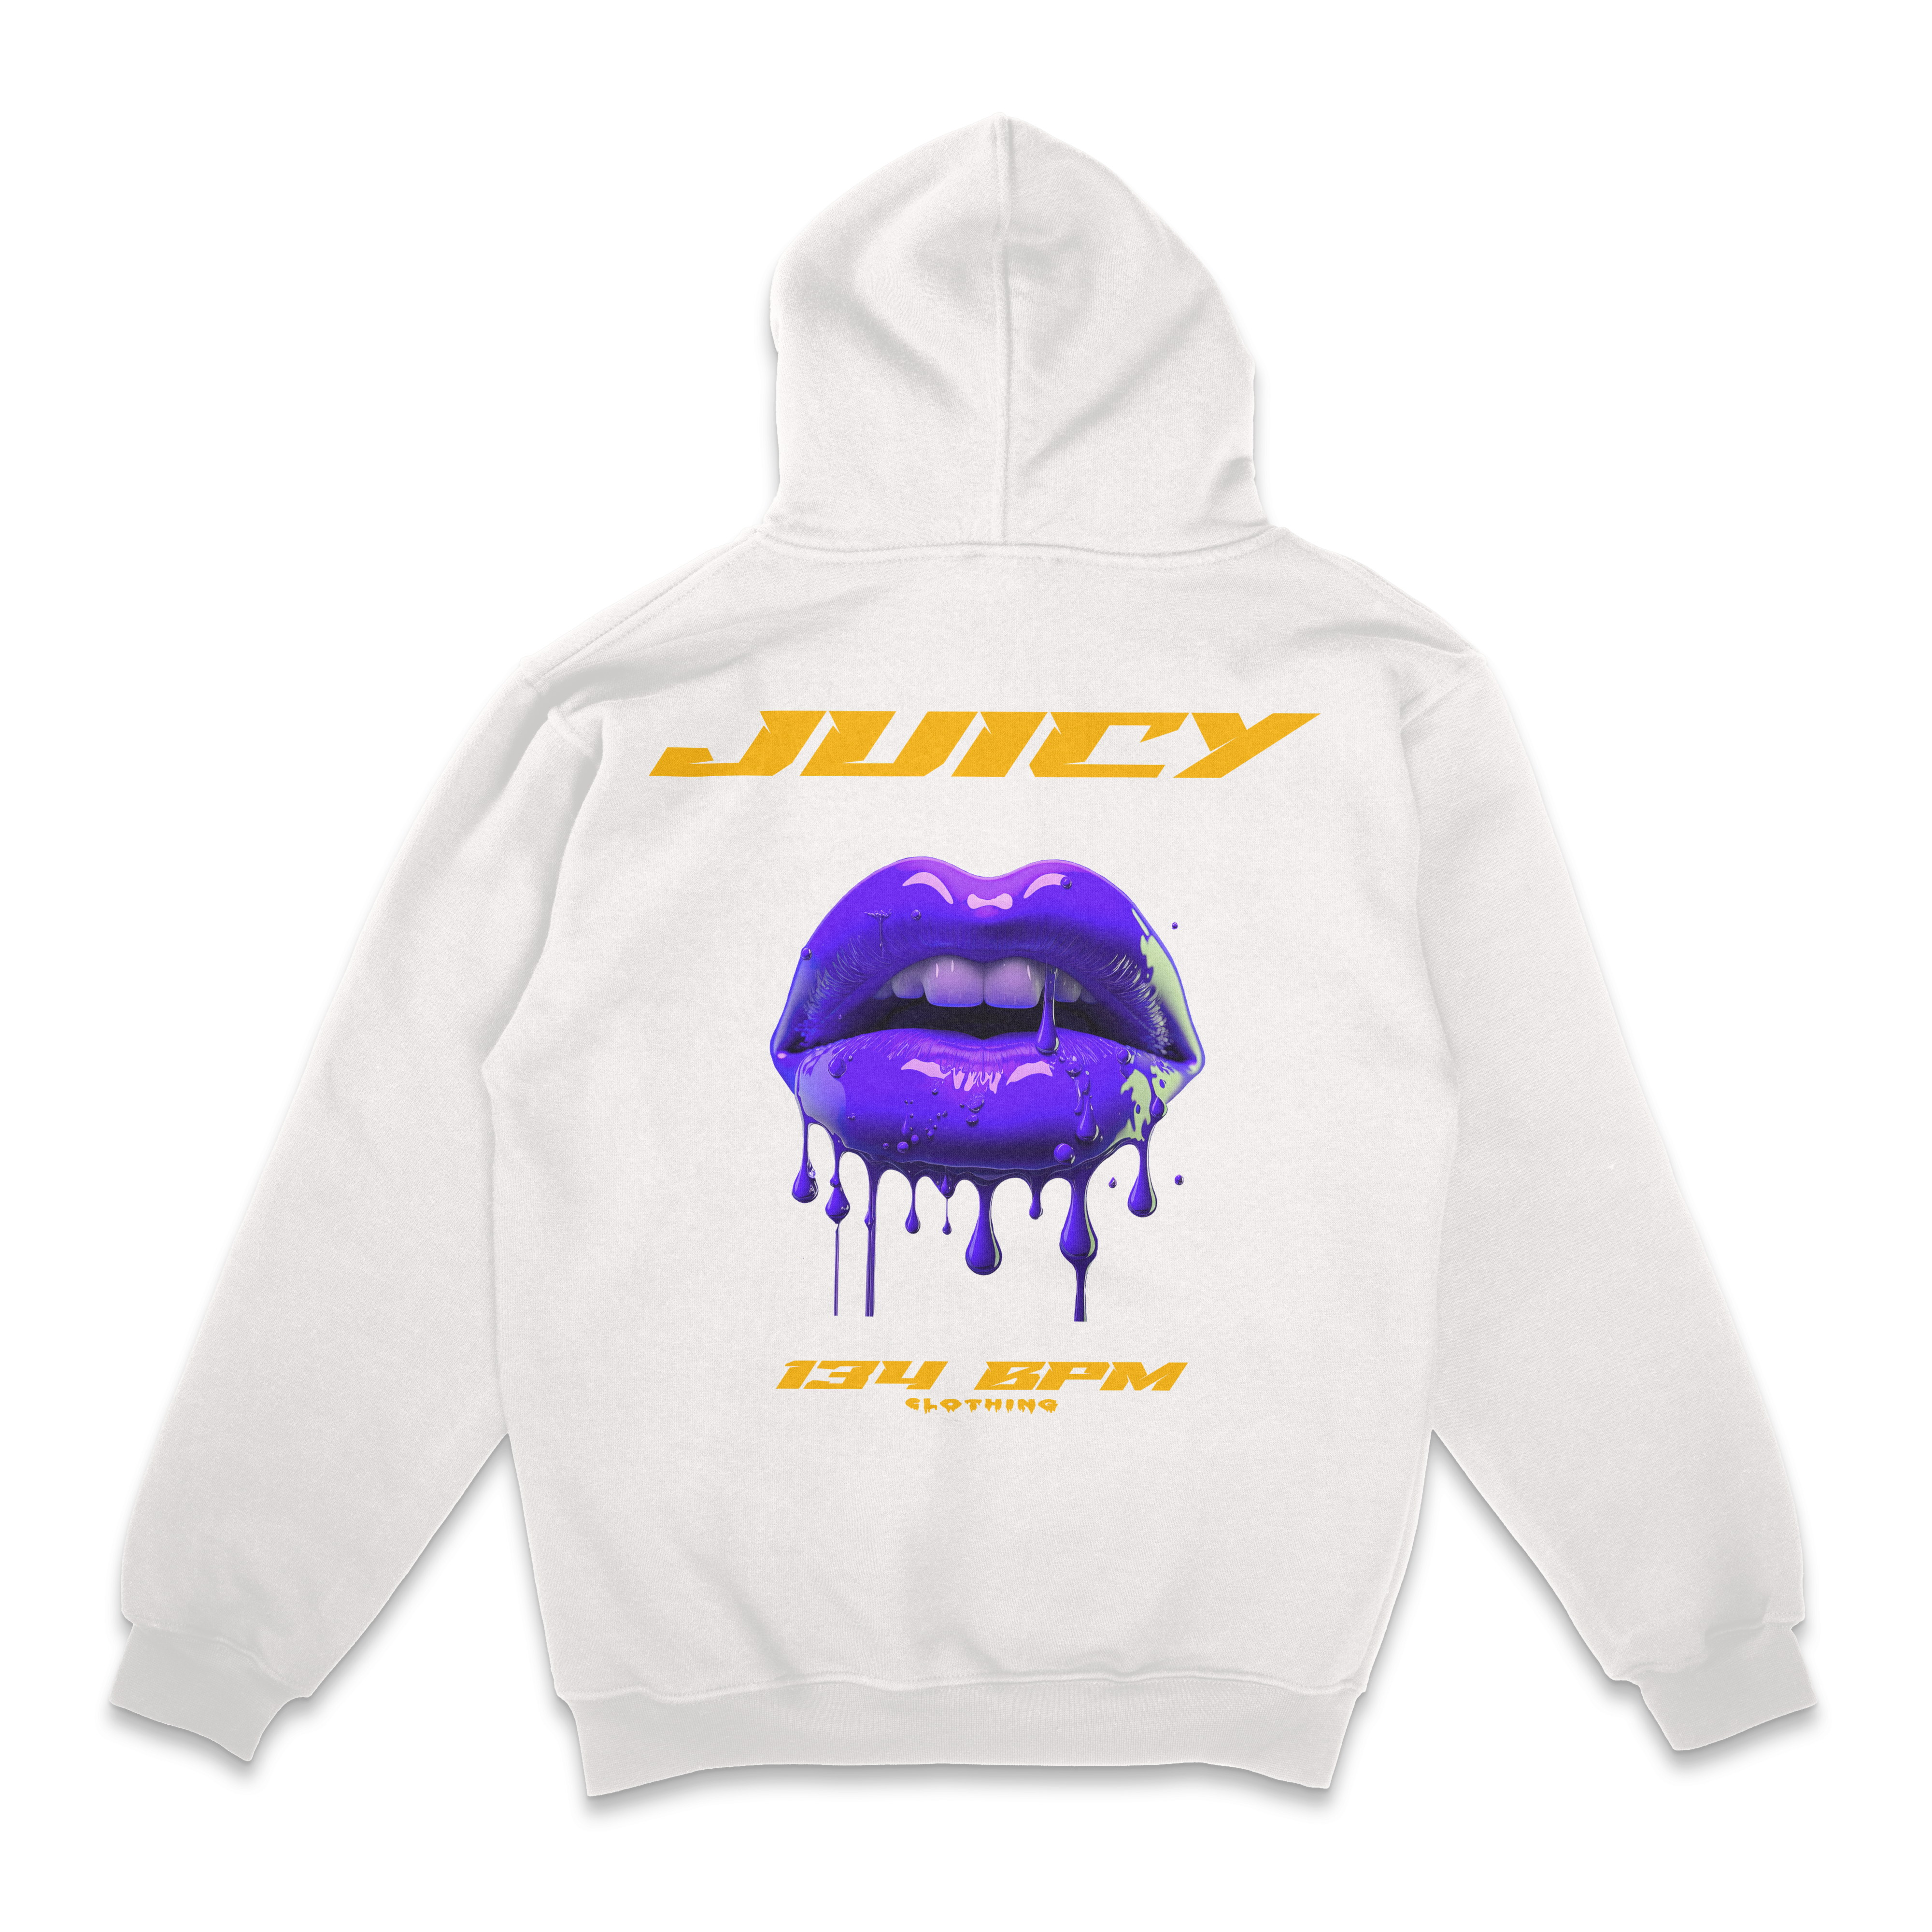 Juicy - Oversized Hoodie Unisex